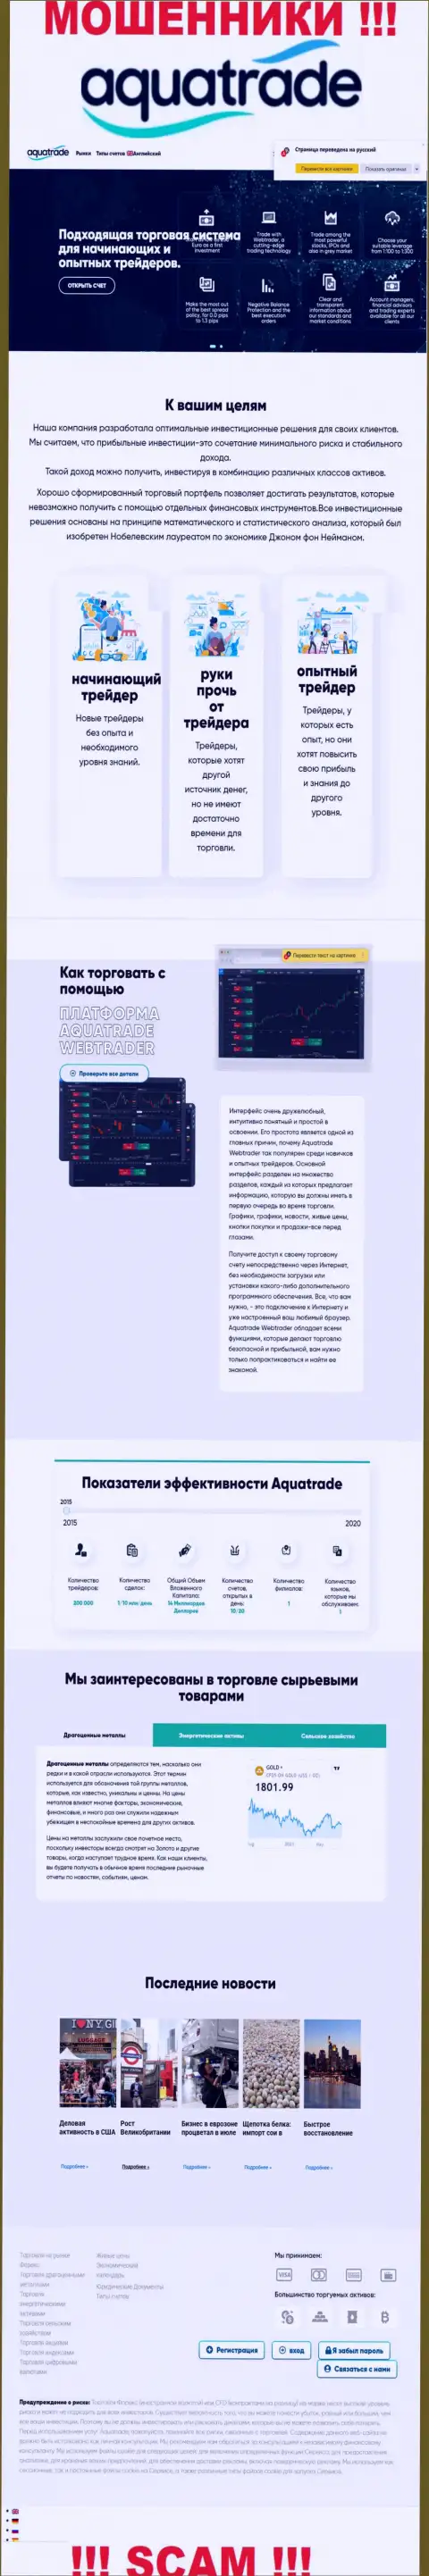 AquaTrade Cc - это интернет-портал мошенников и ворюг AquaTrade Cc